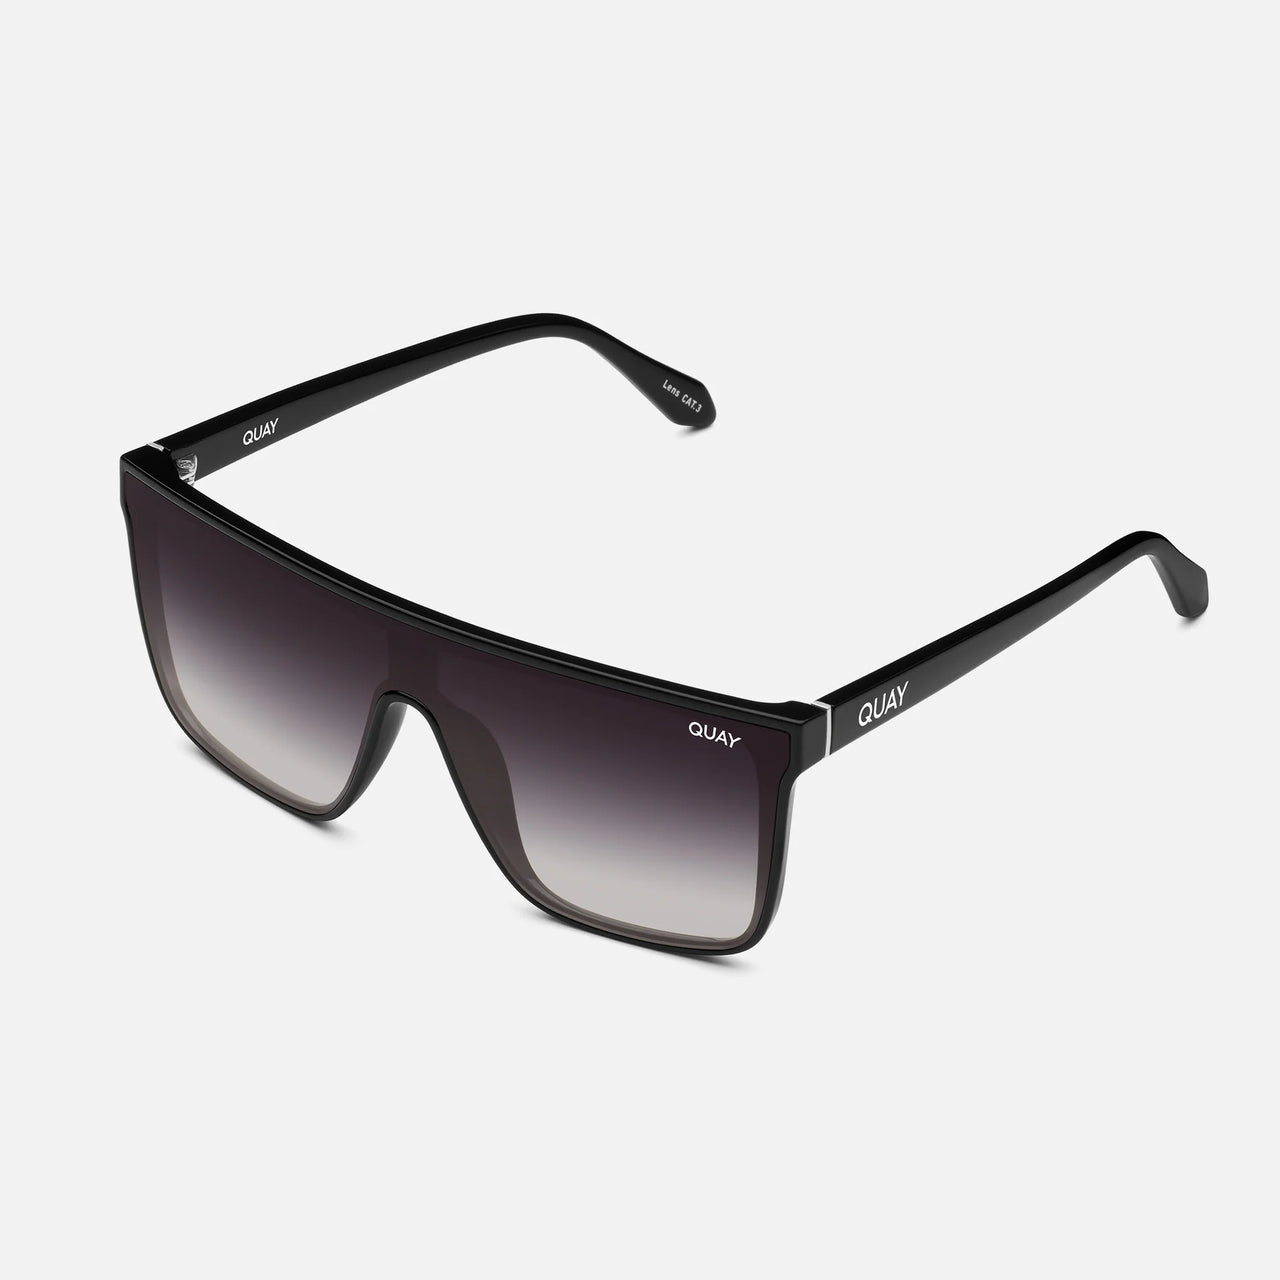 Nightfall Medium Black/Fade, Sunglasses by Quay | LIT Boutique